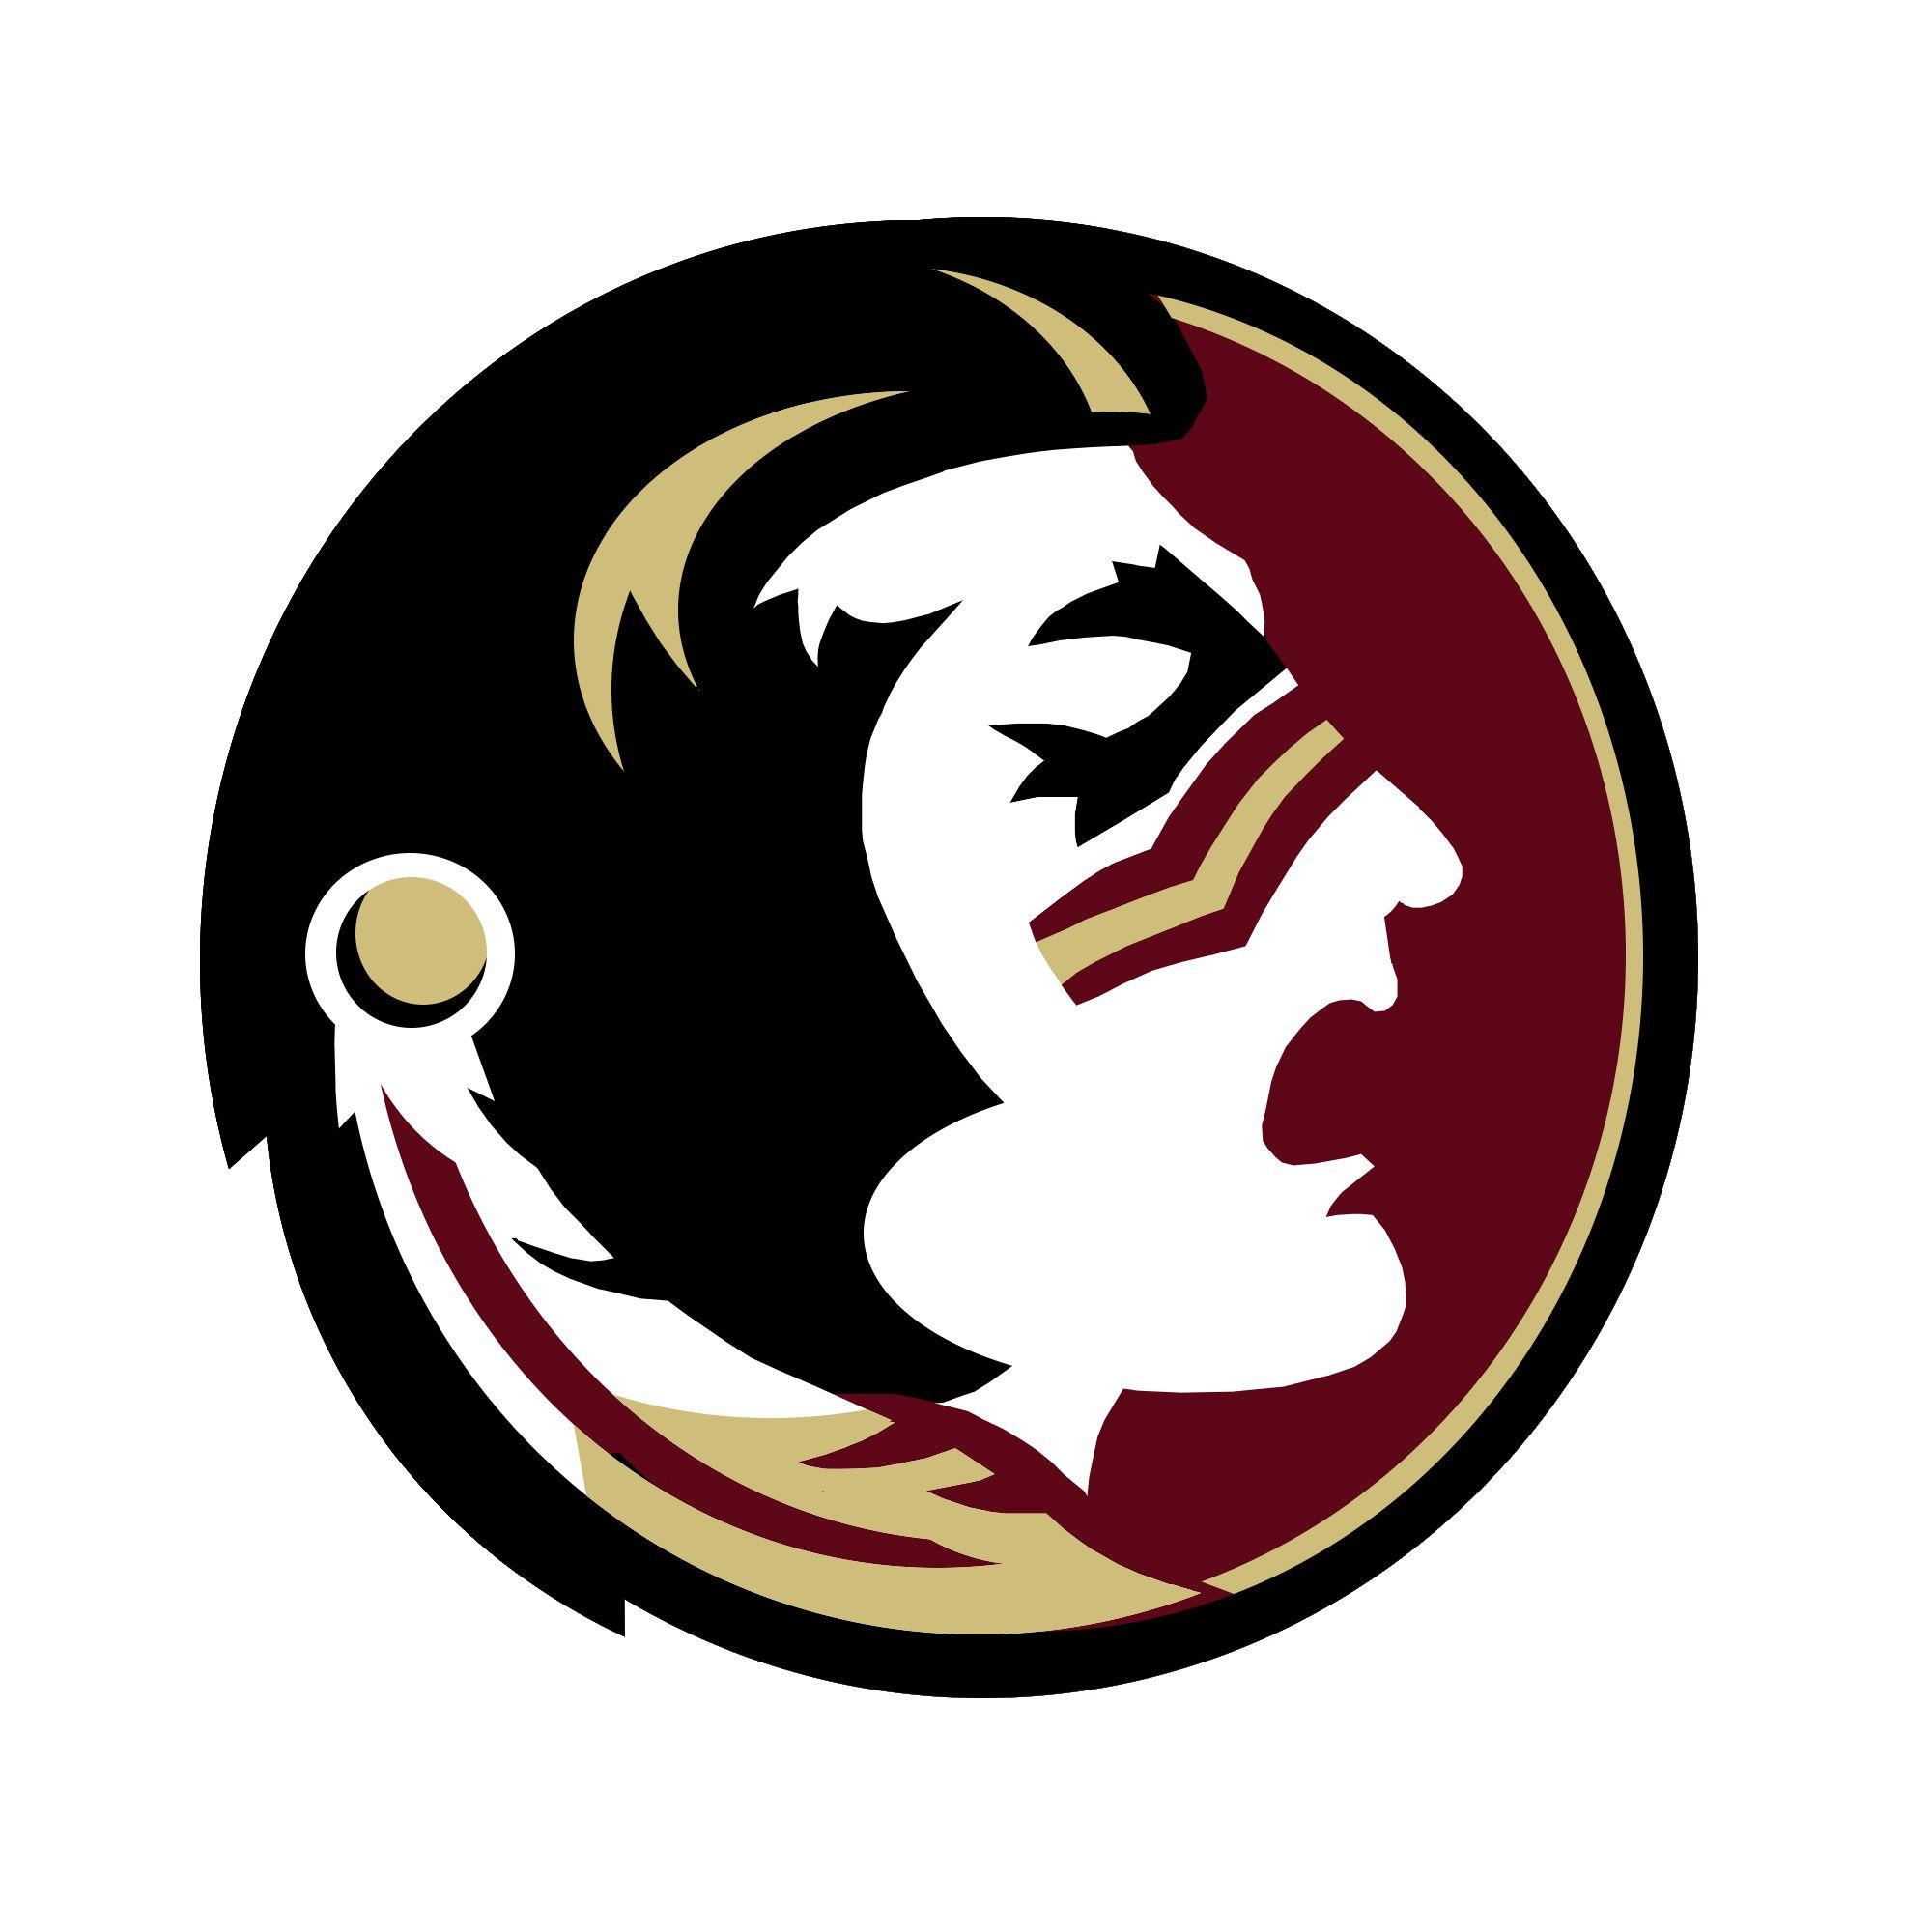 Florida State Football Logo - Updated Florida State Seminoles Logo Creamer's